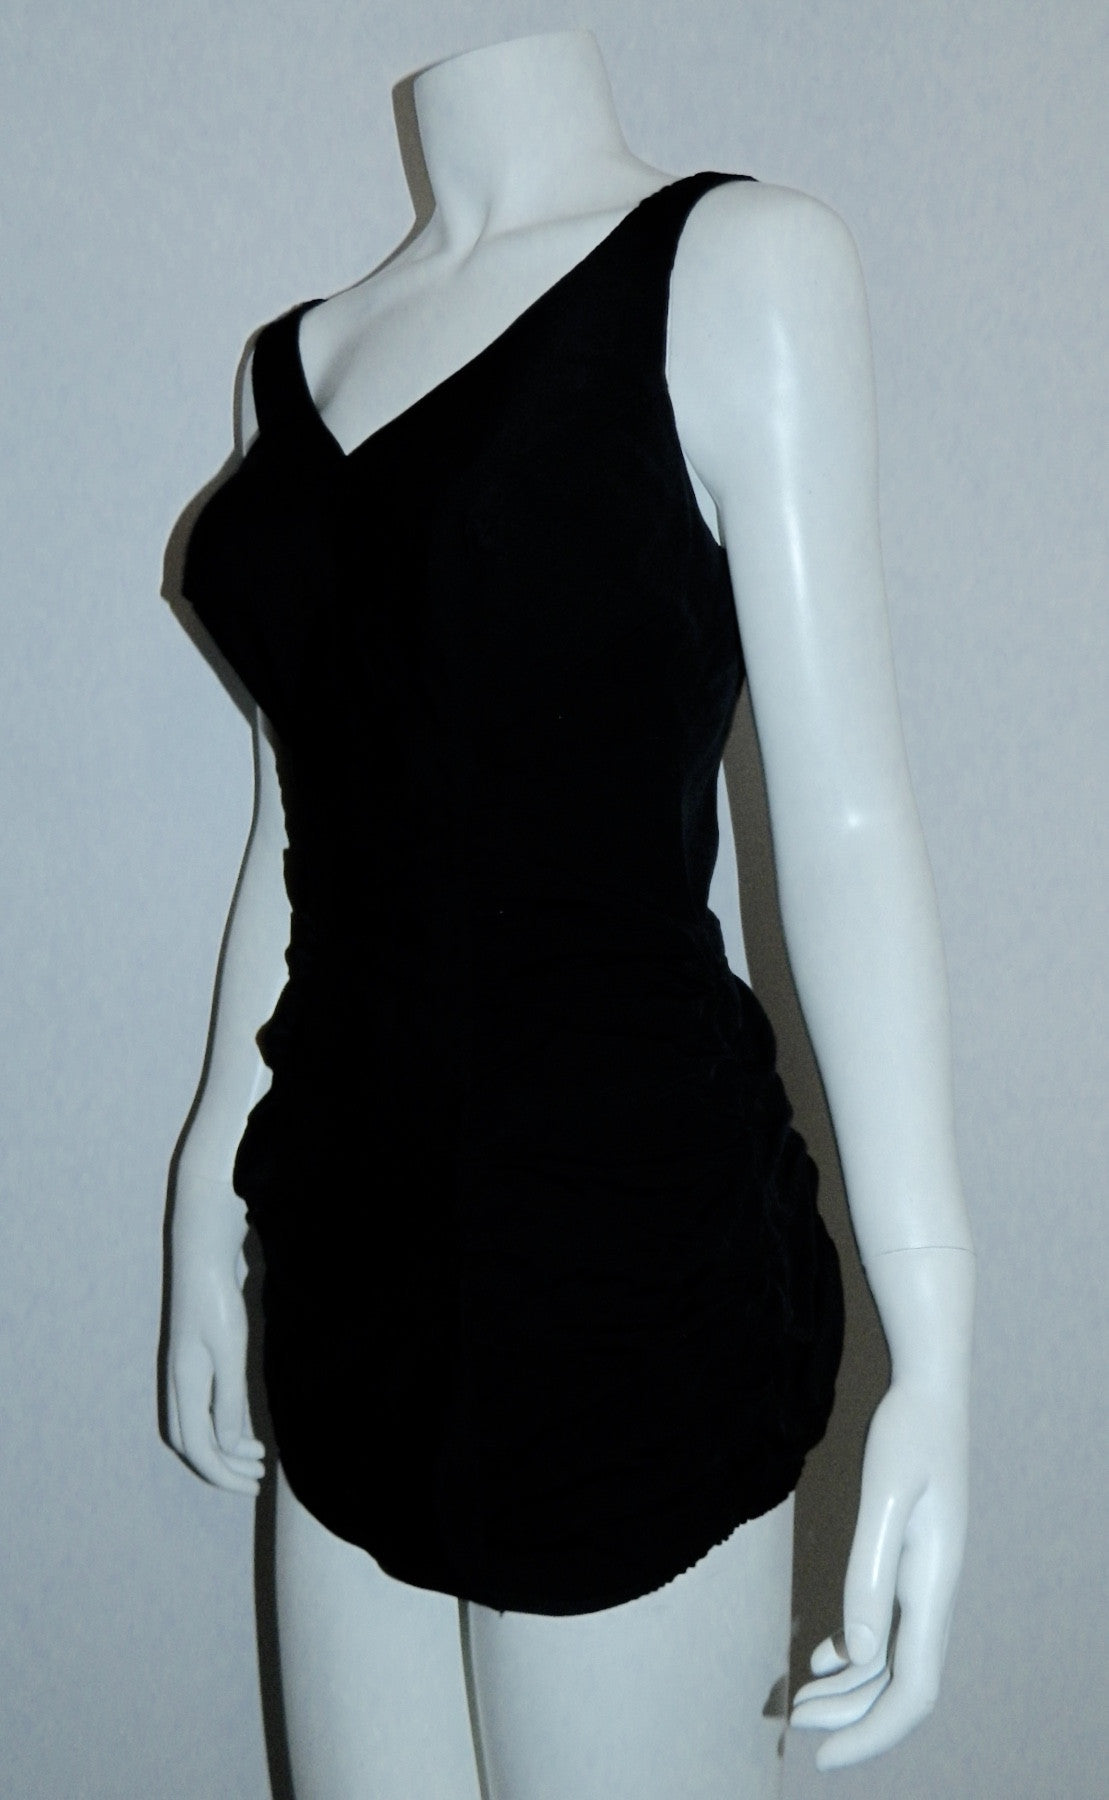 vintage 1950s black bathing suit / zip back / bullet bra / pin up VLV S - M